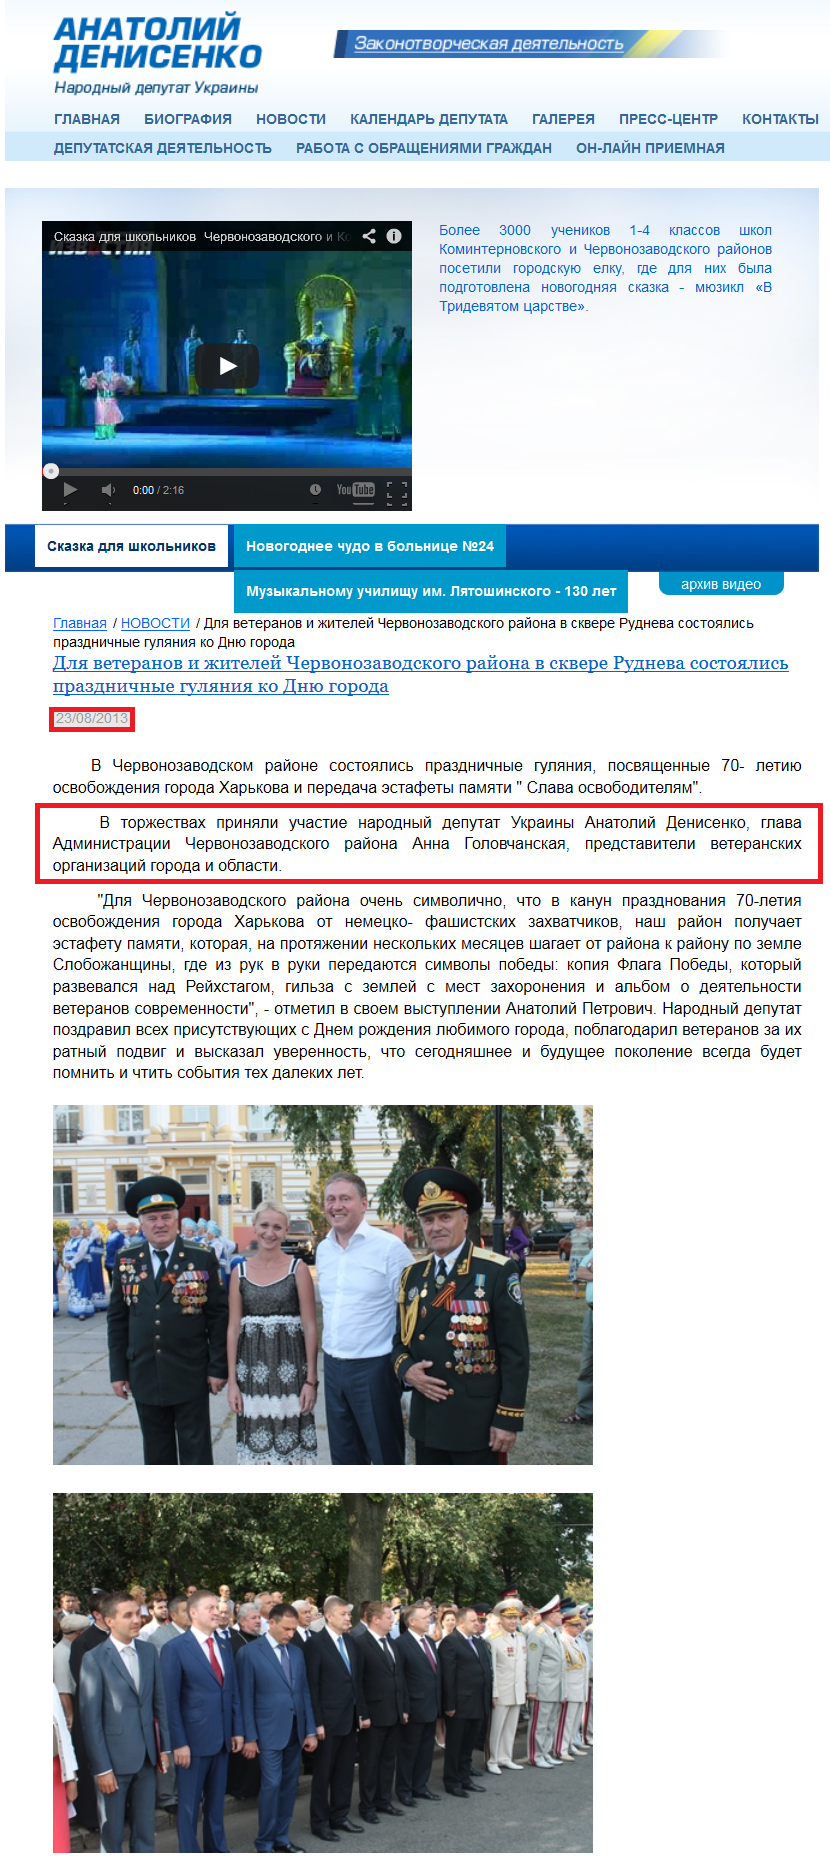 http://denisenko.kharkov.ua/news/506-2013-08-23-10-40-51.html